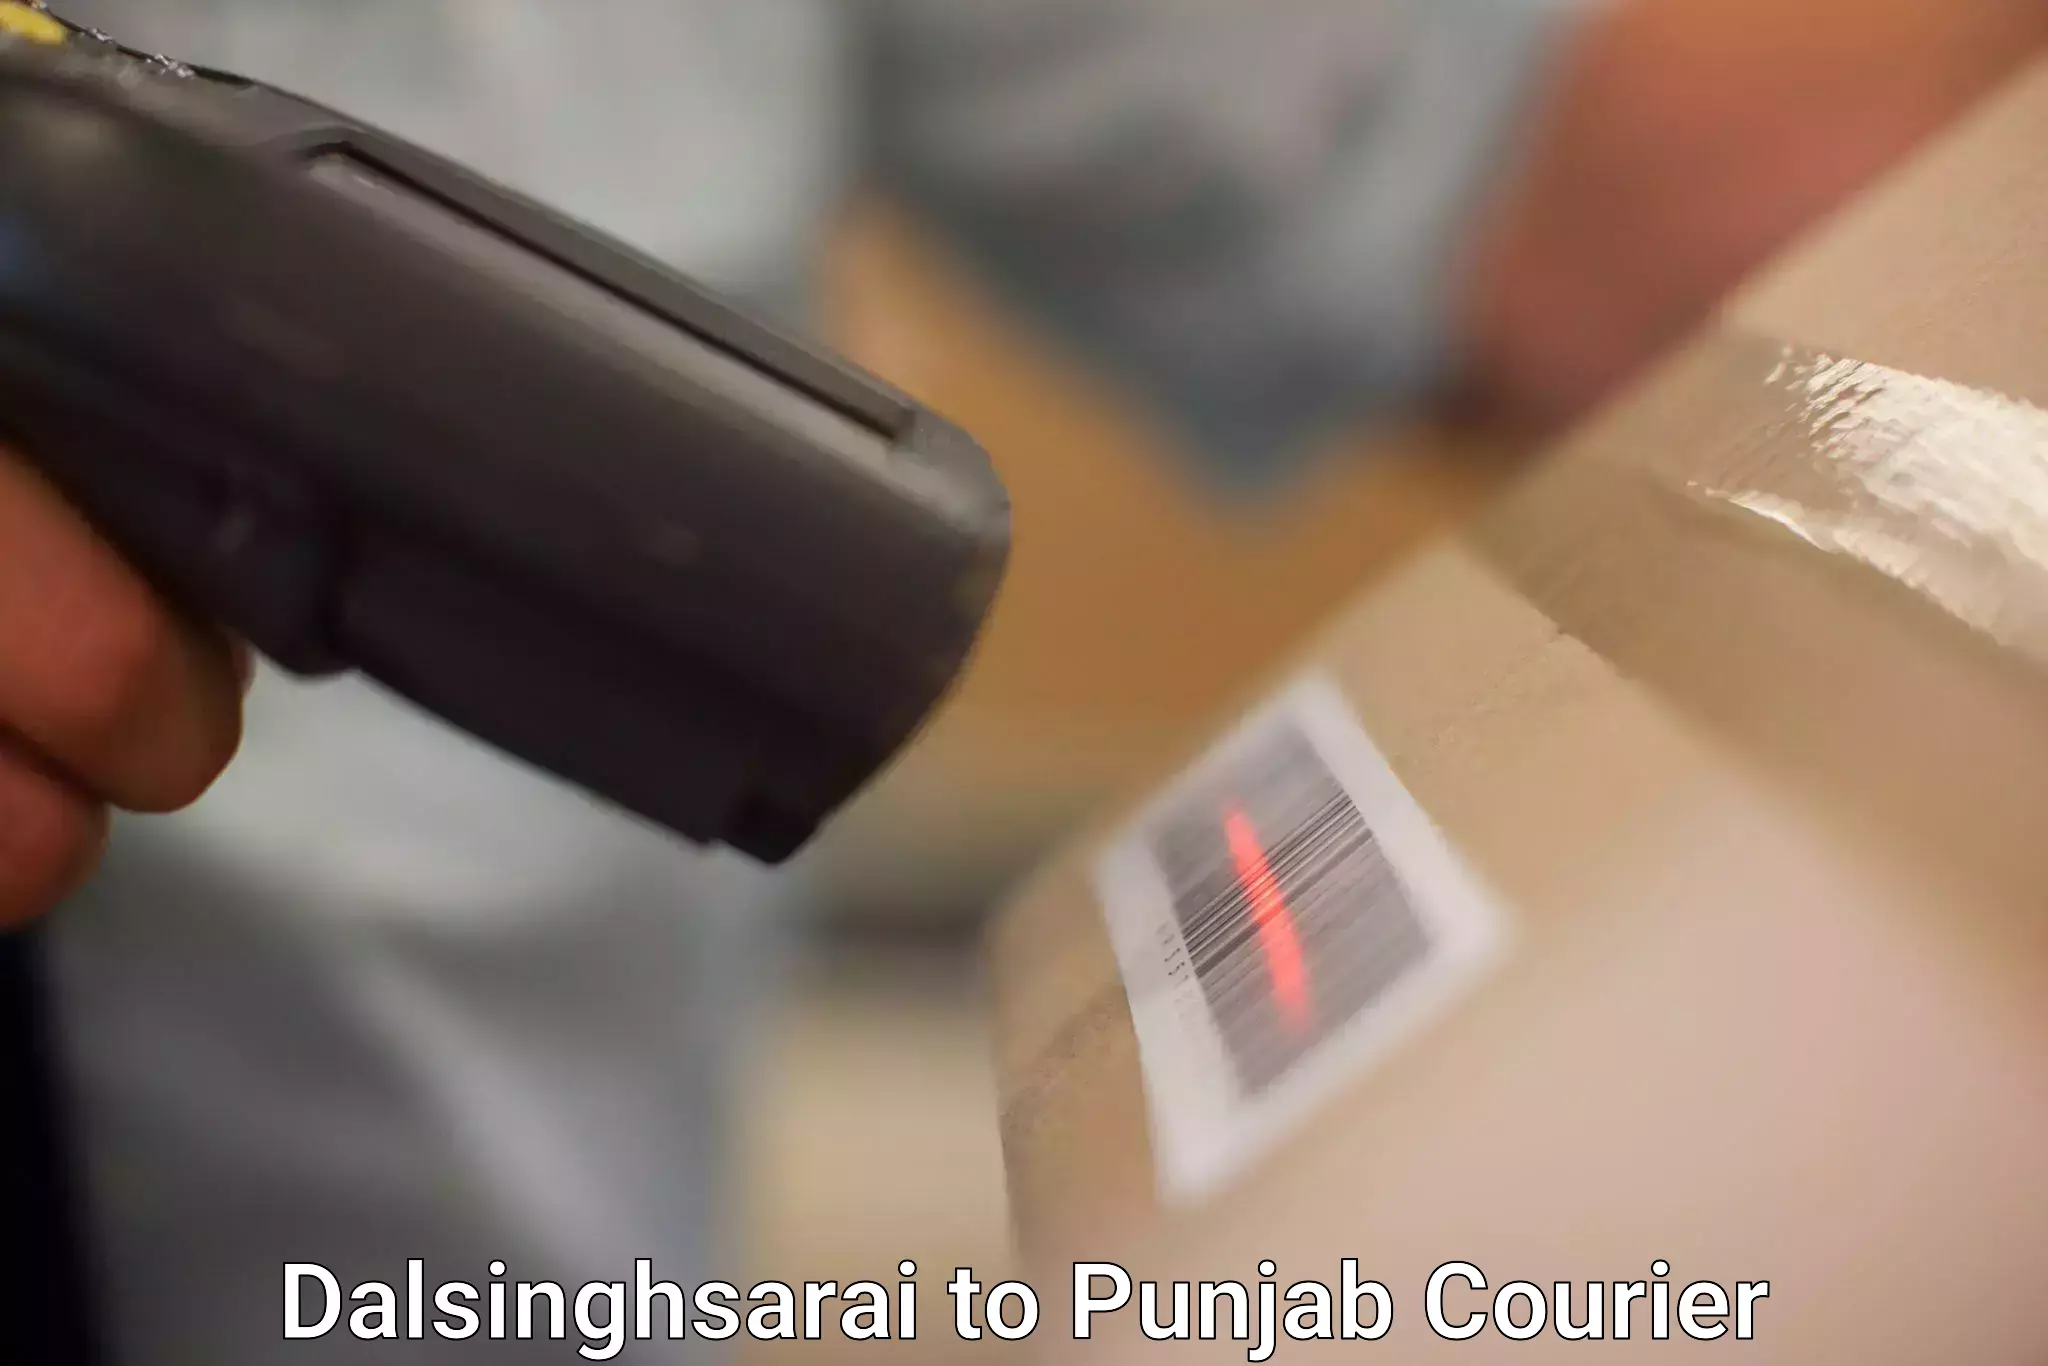 Courier service efficiency Dalsinghsarai to Dera Bassi